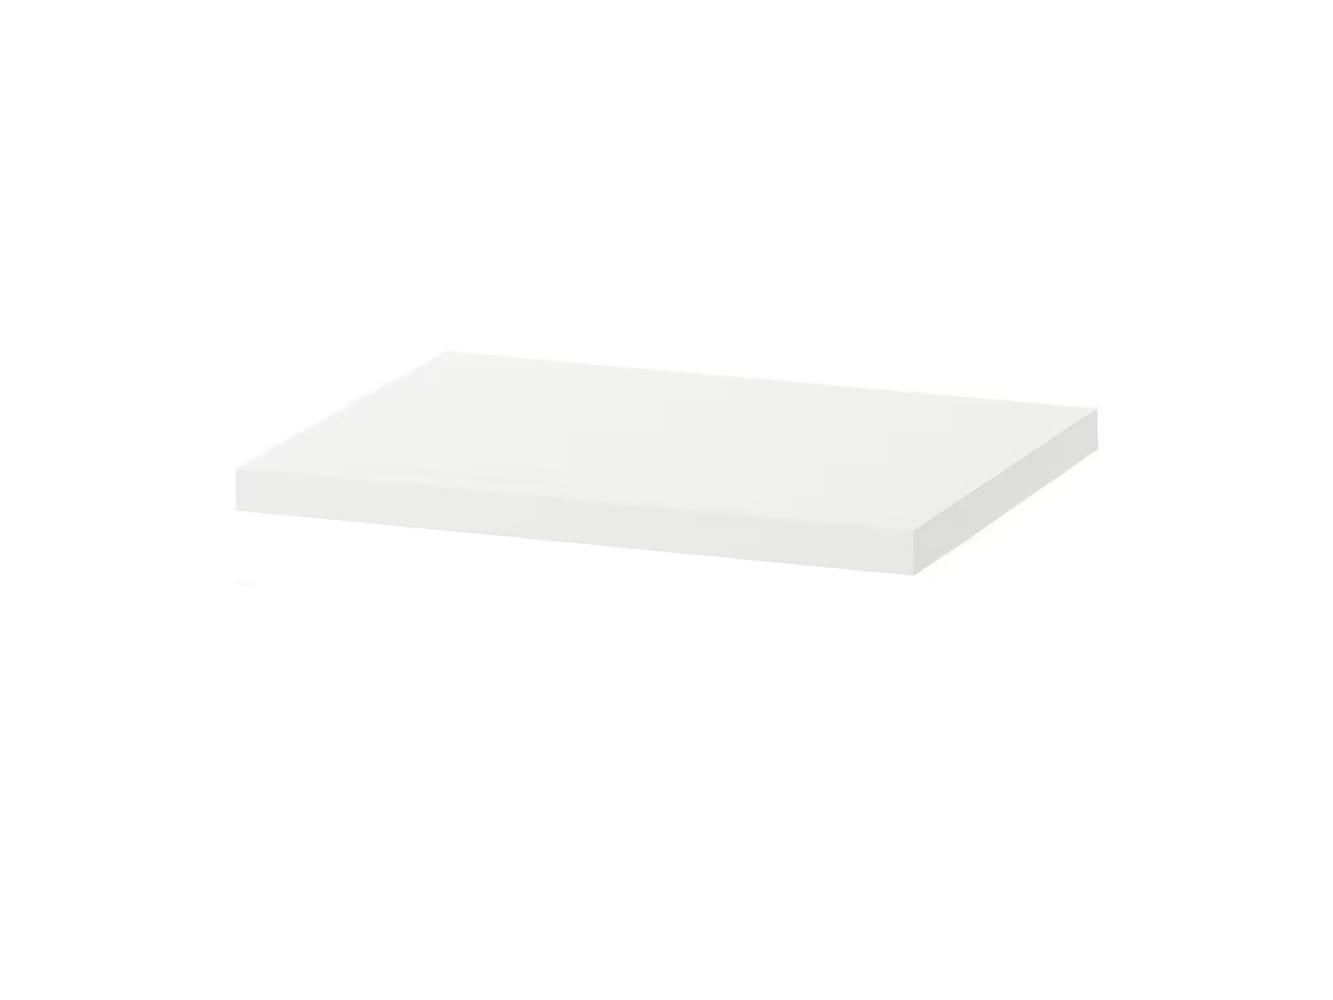 Полка настенная Лак 14 white ИКЕА (IKEA) изображение товара